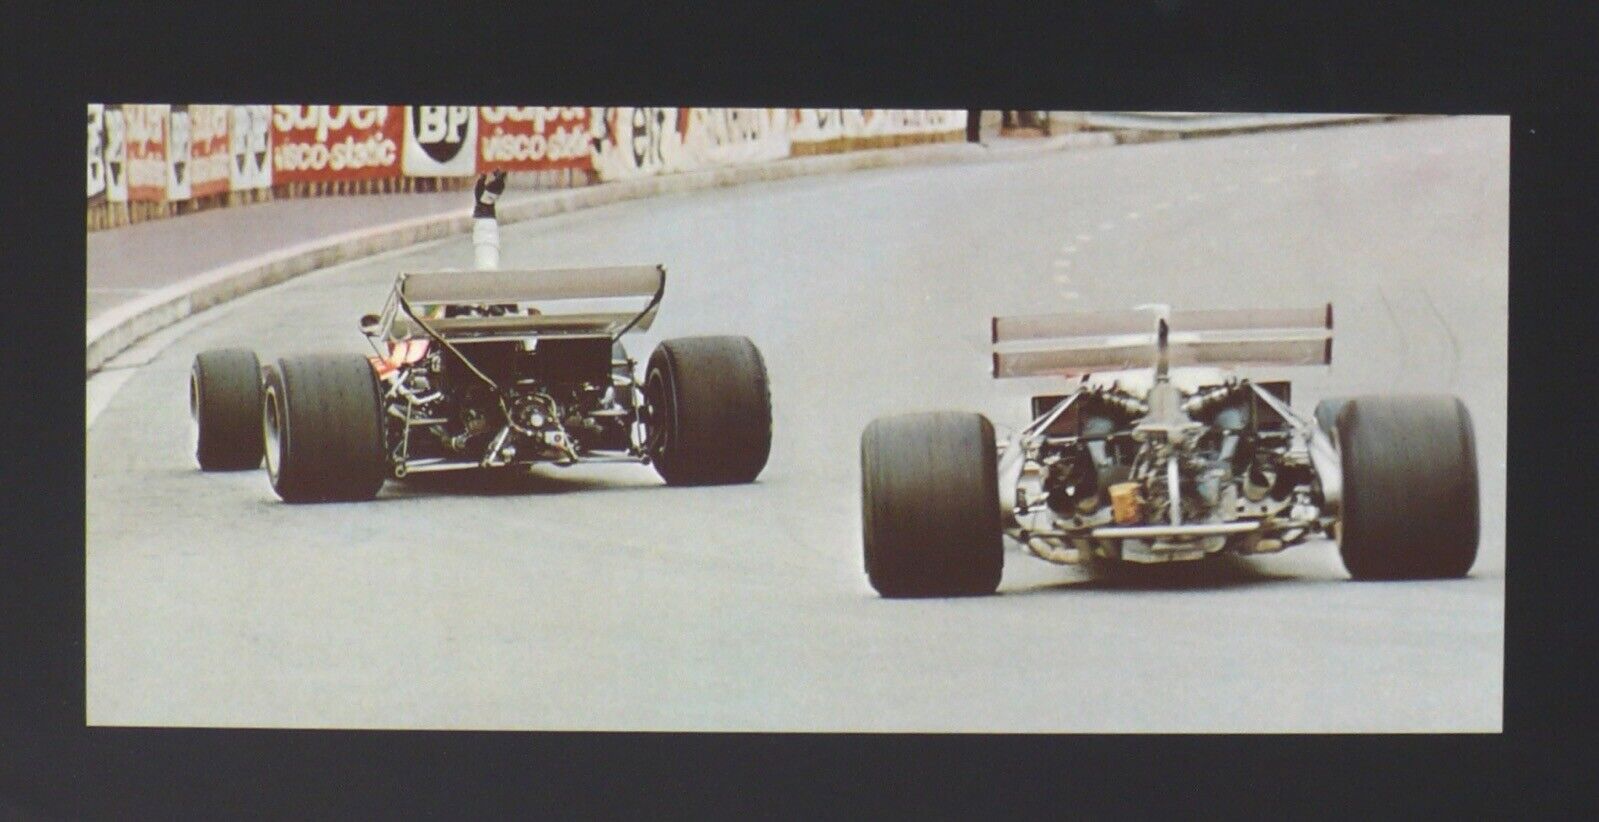 1971 MONACO Grand Prix FERRARI MARCH PESCAROLO JESSE ALEXANDER 5x12 Photo Print